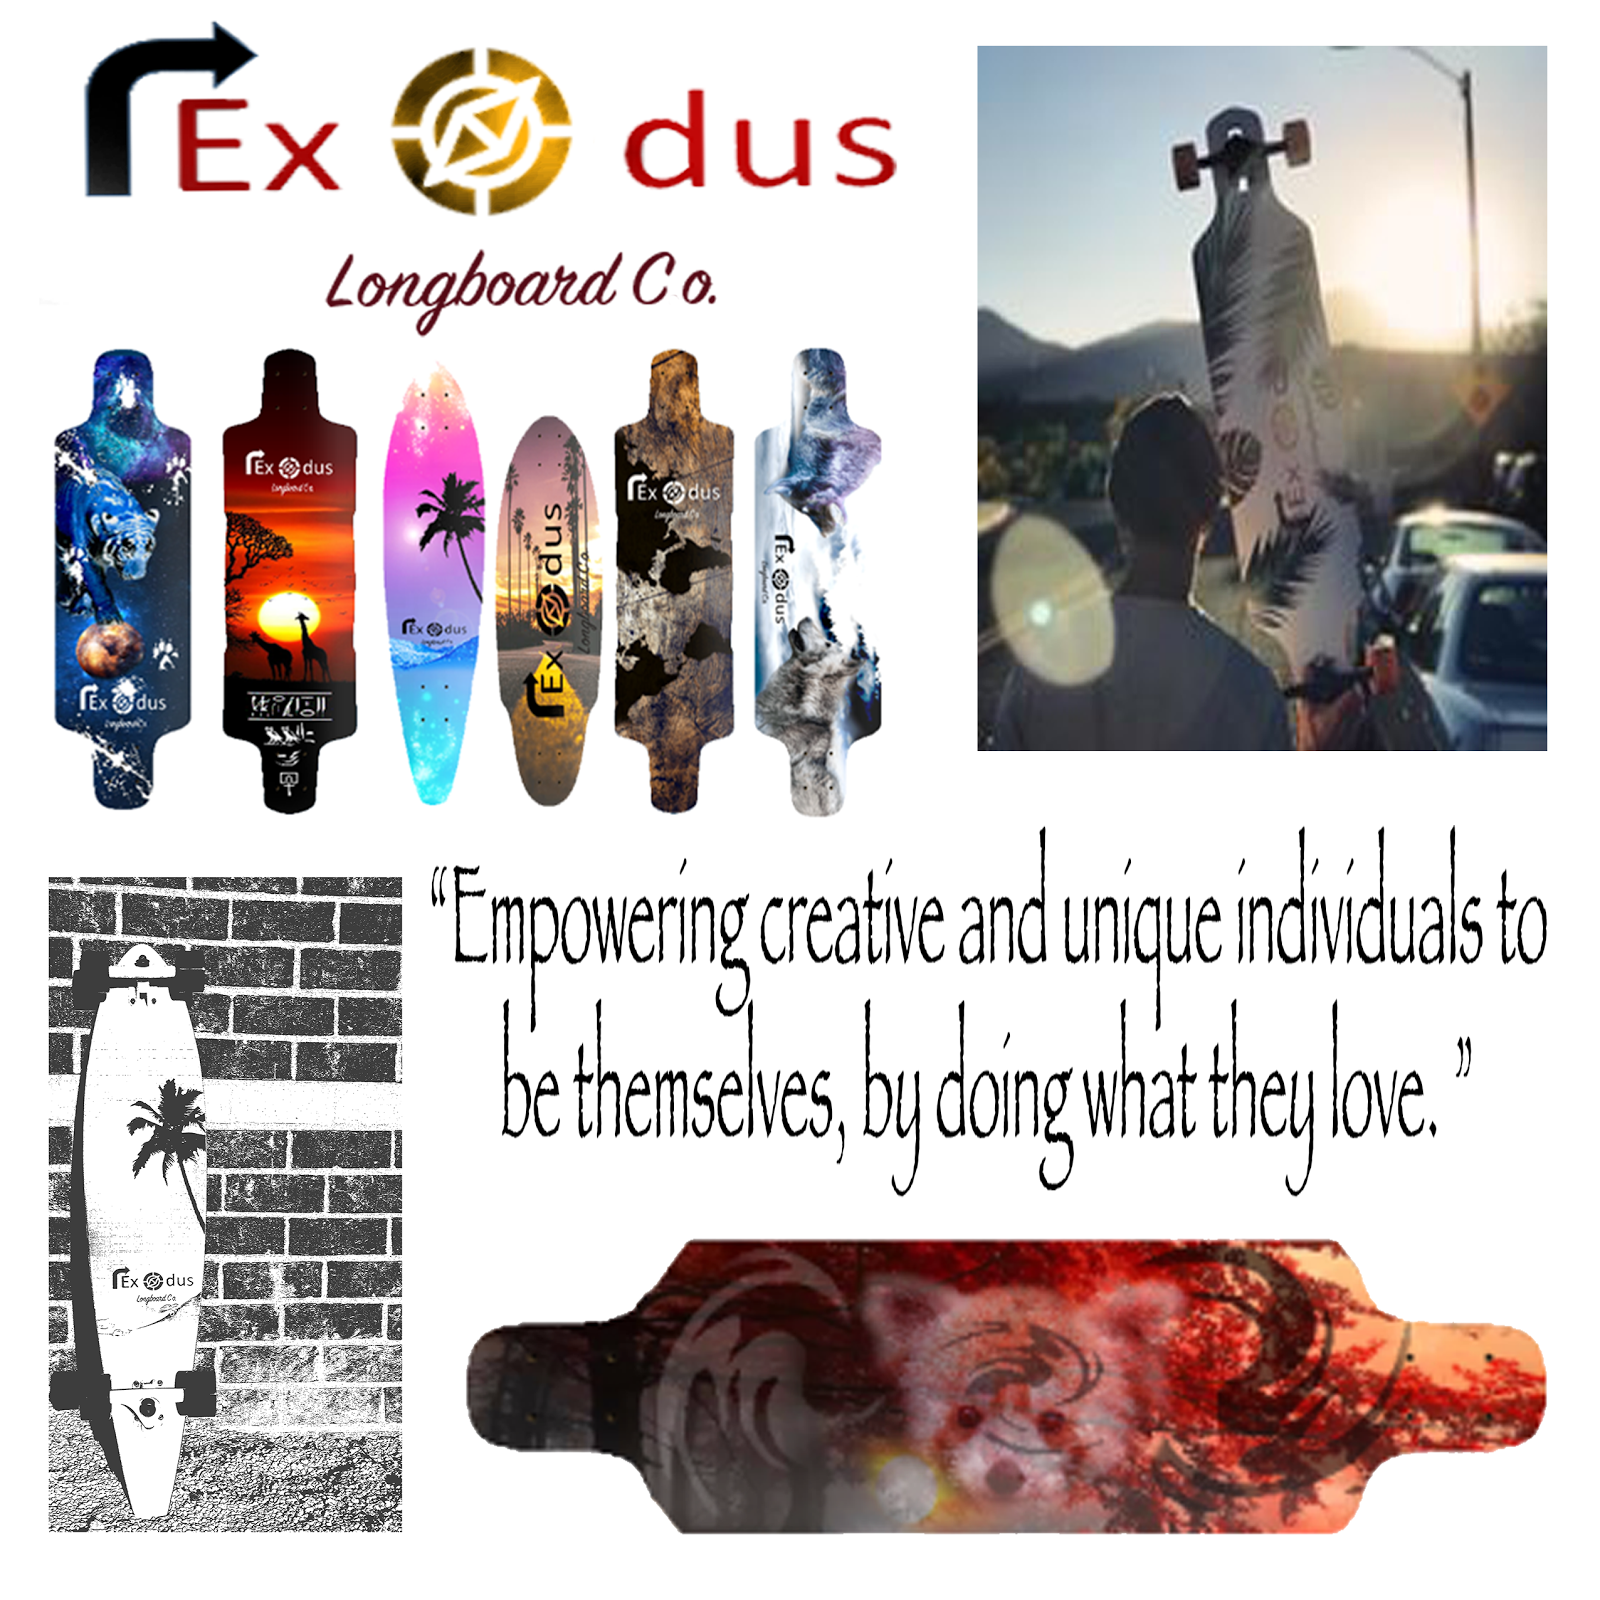 Exodus Longboard Company